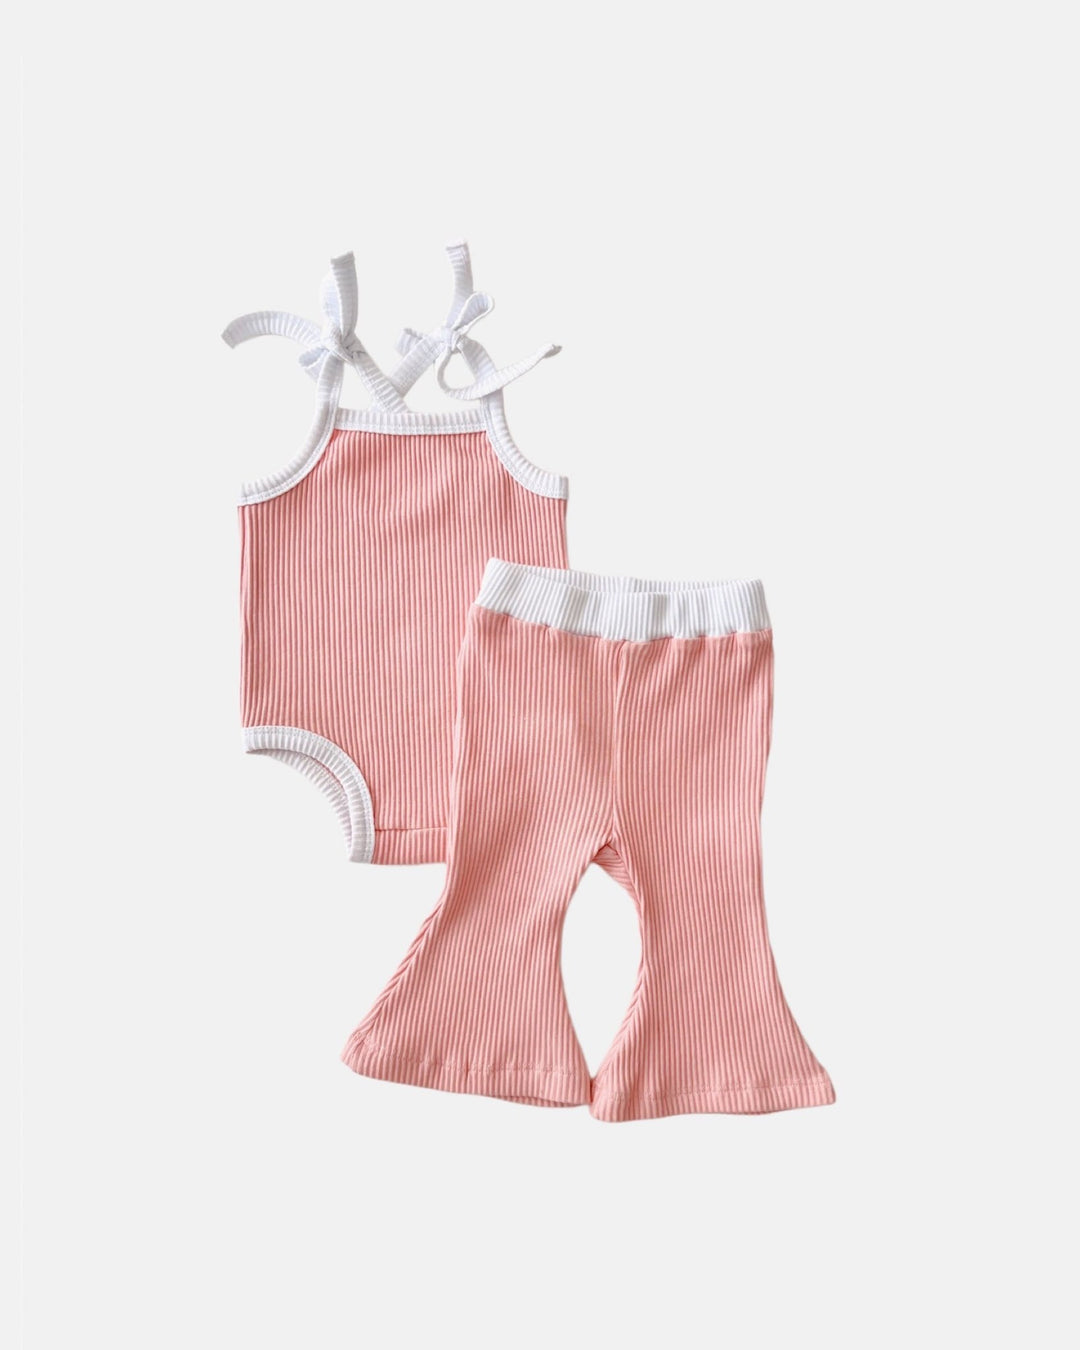 Pink Bell Bottom Set - BABY GIRL CLOTHES - LUCKY PANDA KIDS